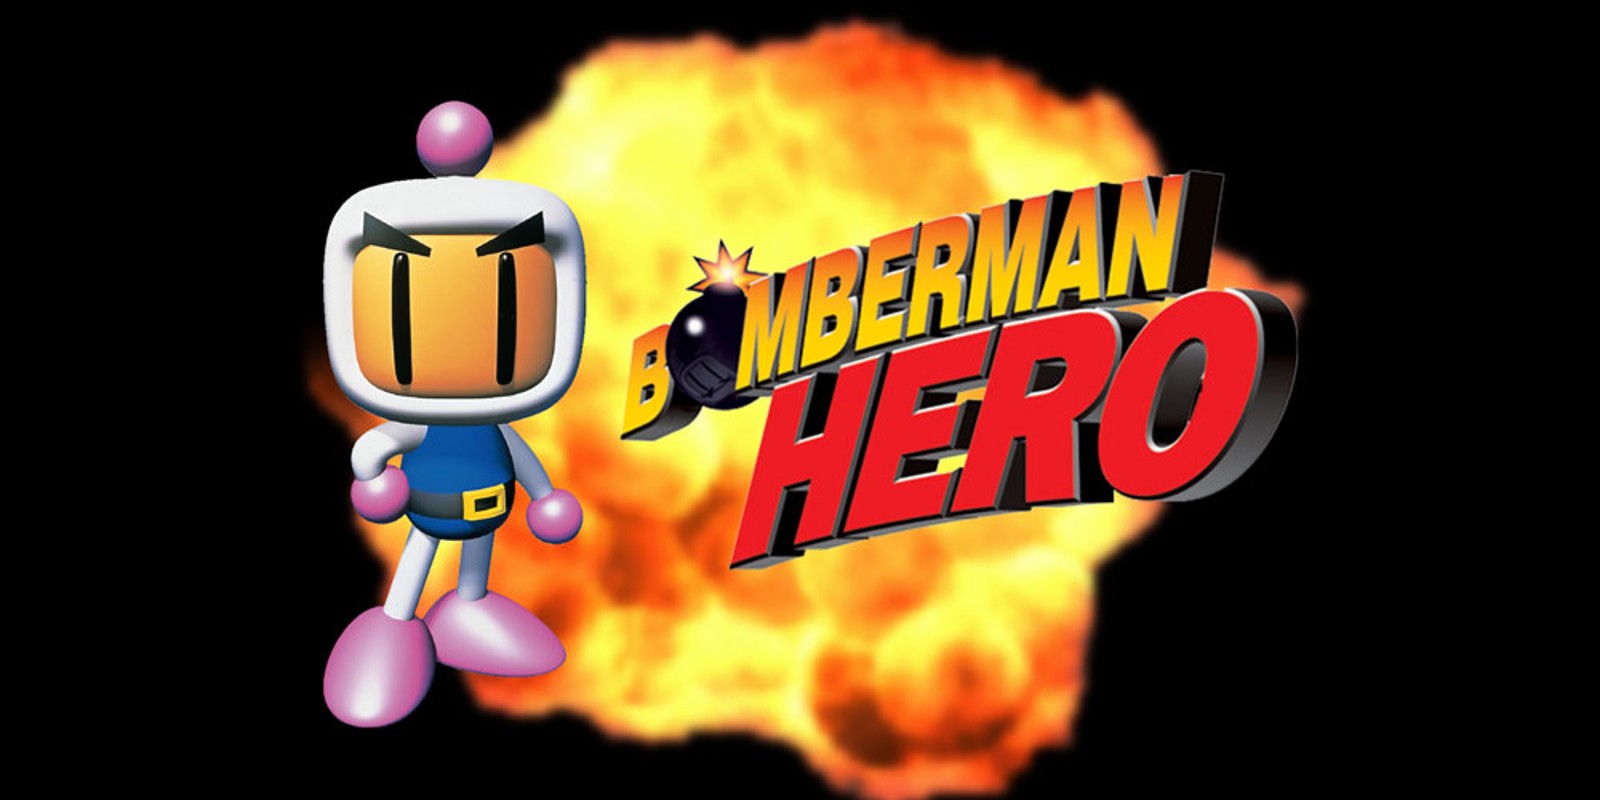 free downloads Bomber Bomberman!